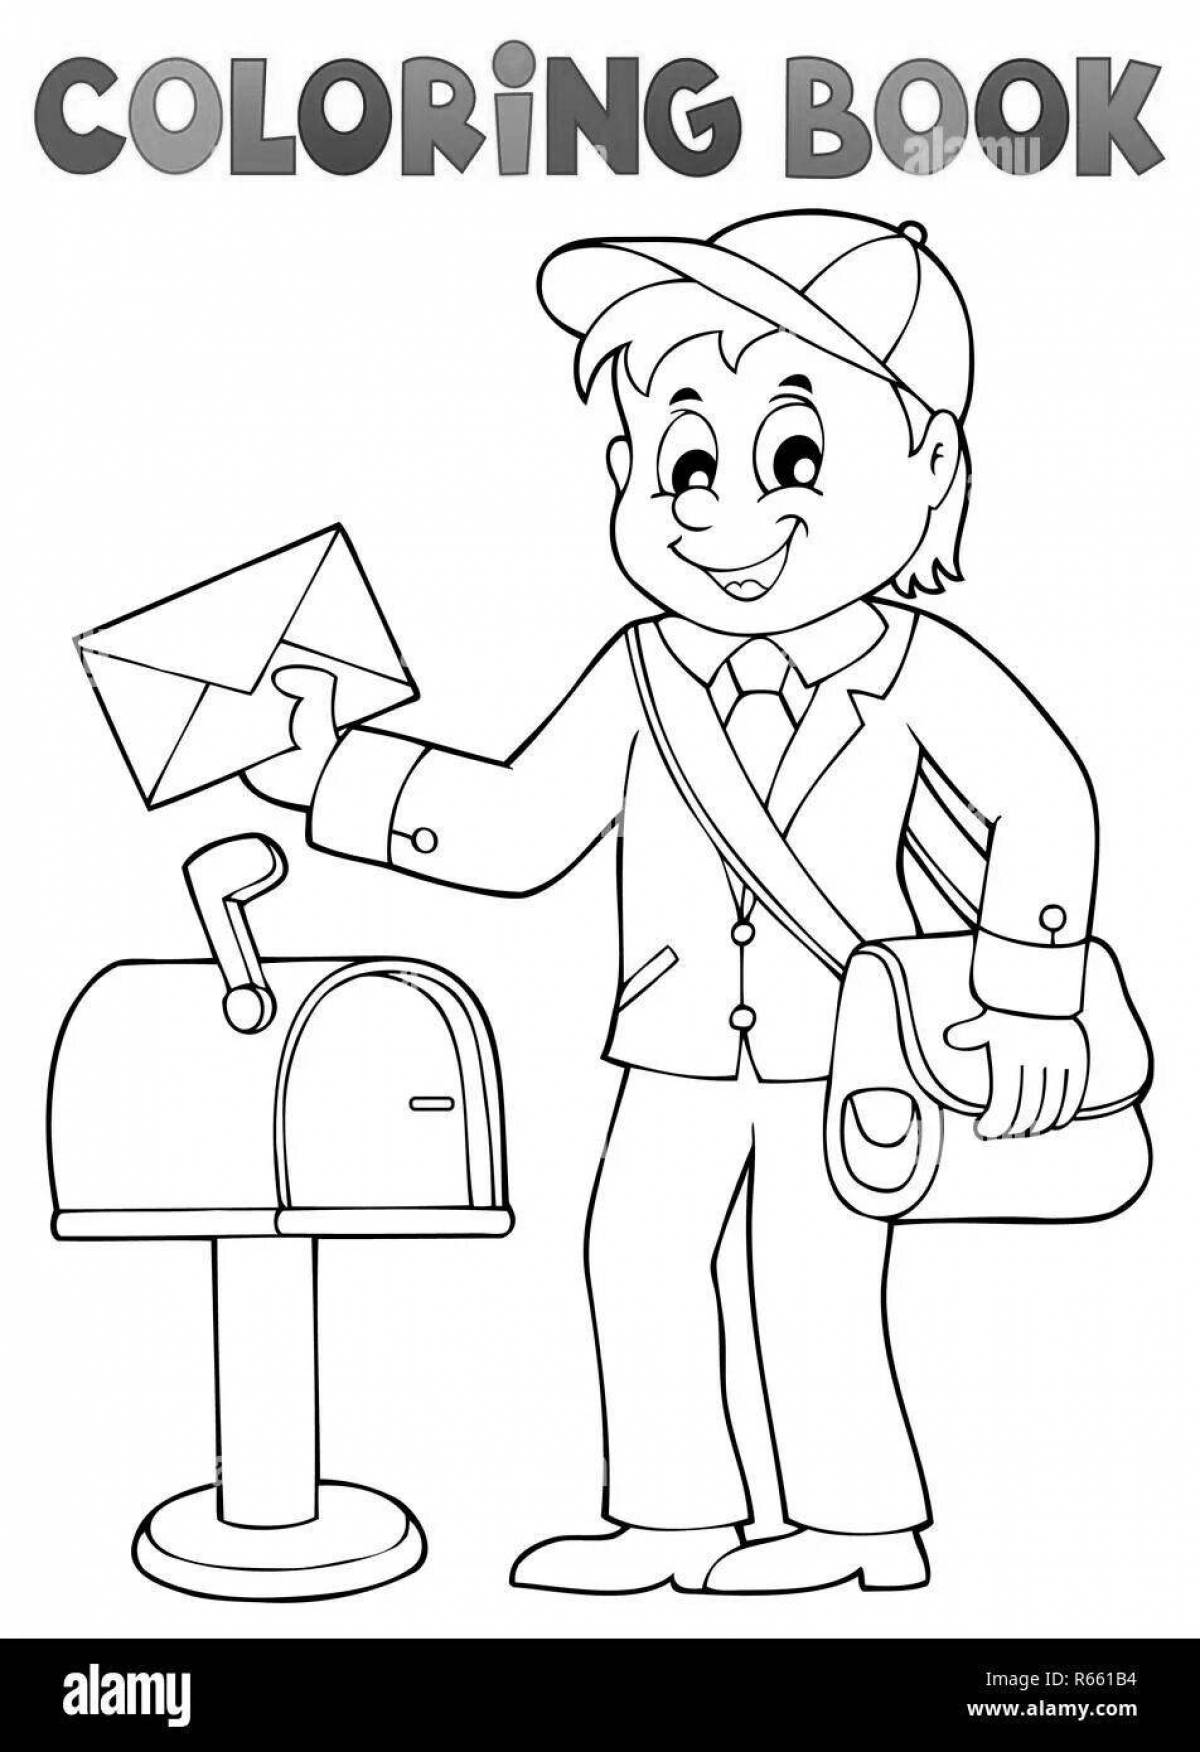 Coloring postman for preschoolers